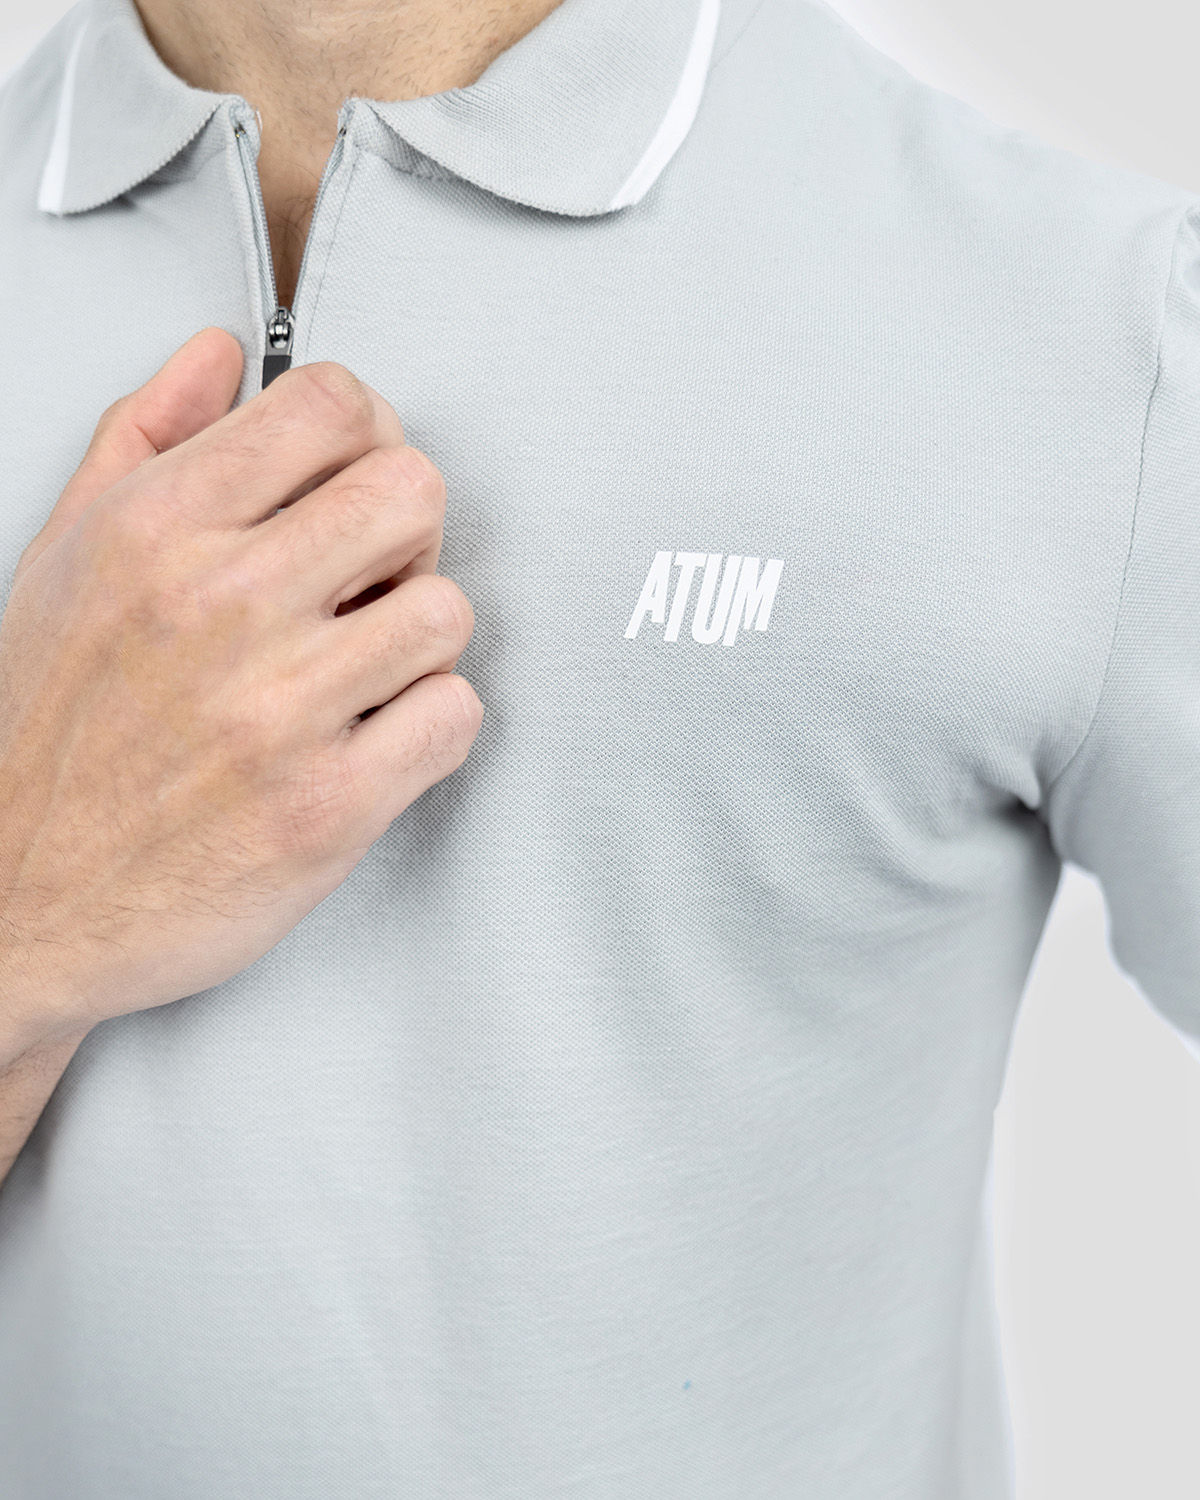 Atum Men's polo t-shirt